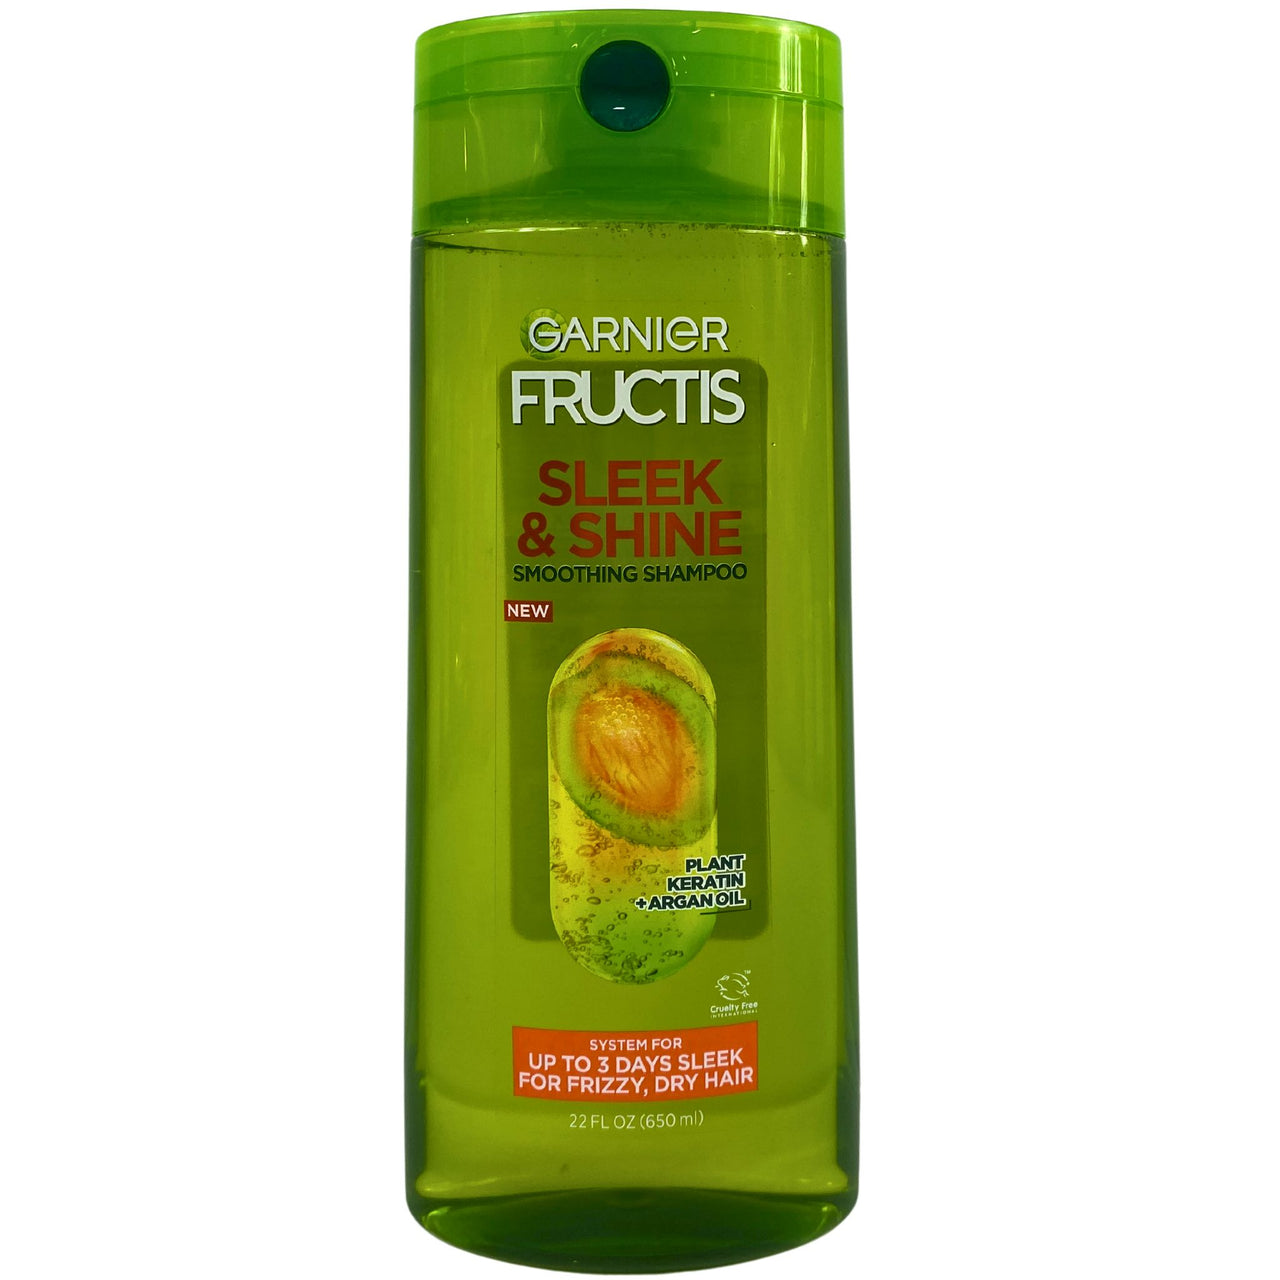 Garnier Fructis Sleek & Shine Smoothing Shampoo 